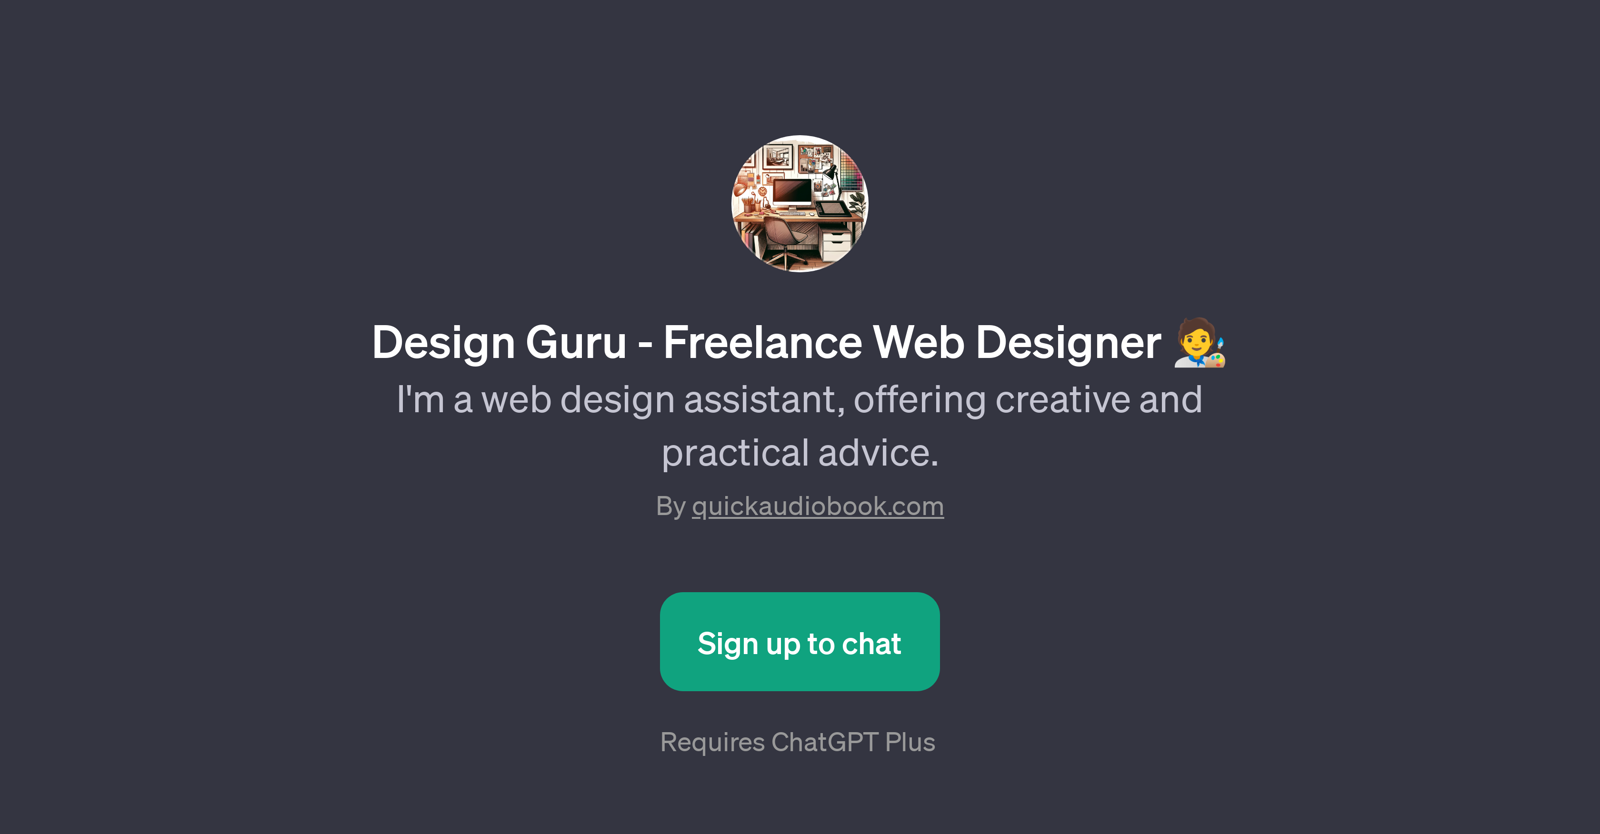 Design Guru - Freelance Web Designer website